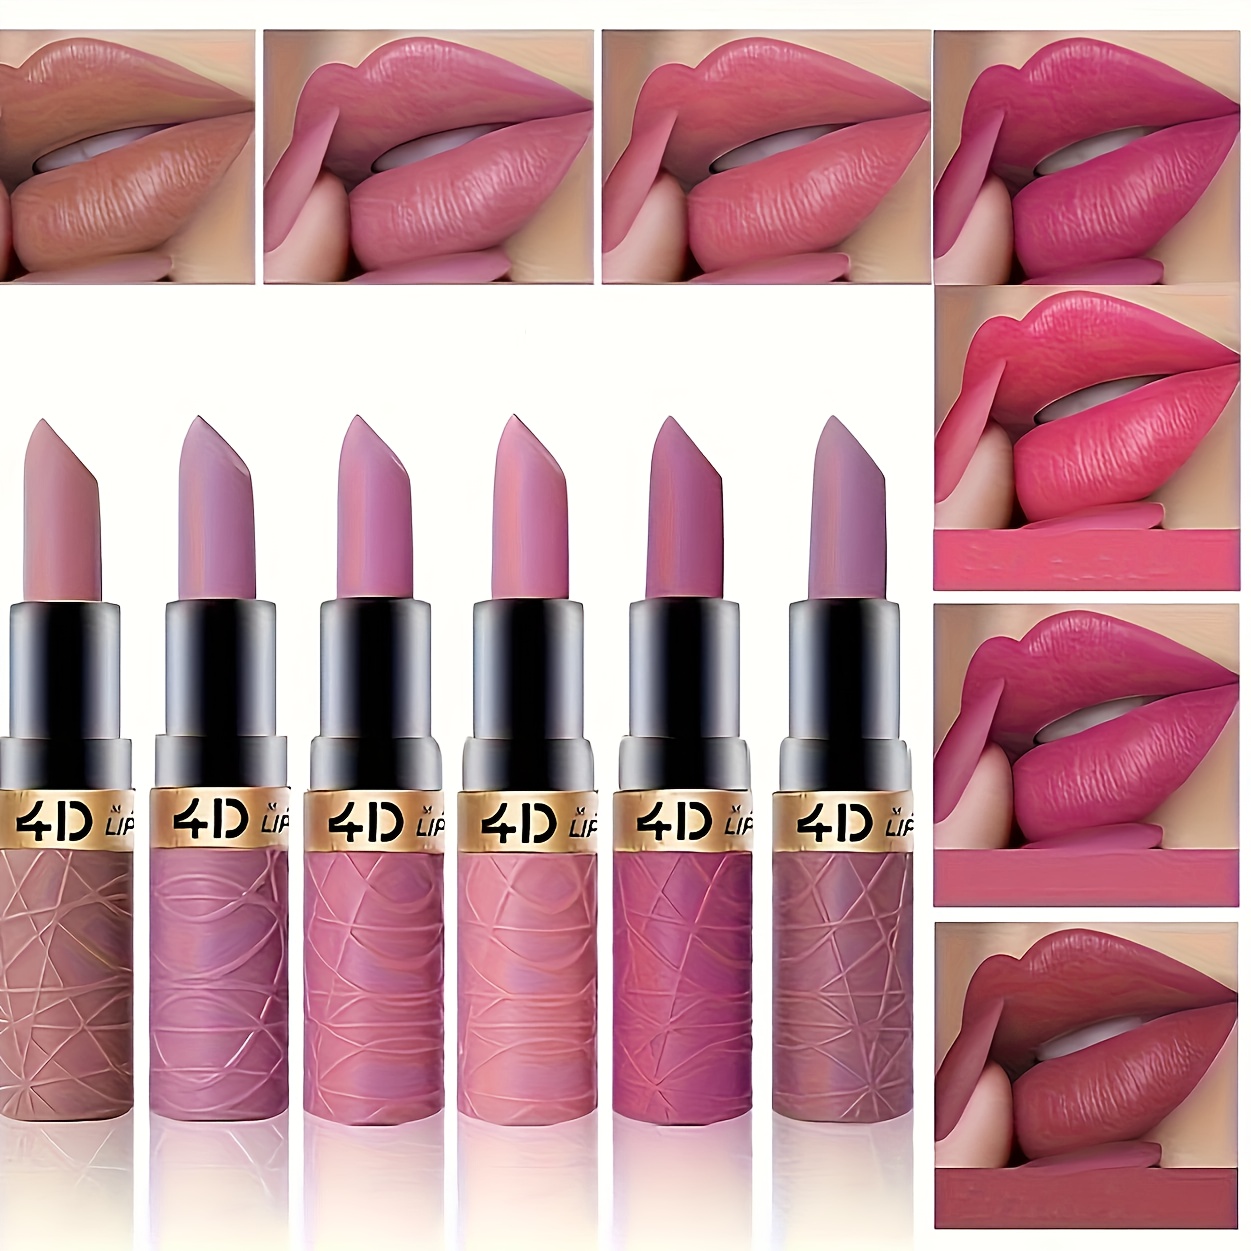 

6 Colors Moisturizing Water Glossy Lipstick Matte Creamy Long Lasting Pinkish Berry Color Tone Makeup Lipstick